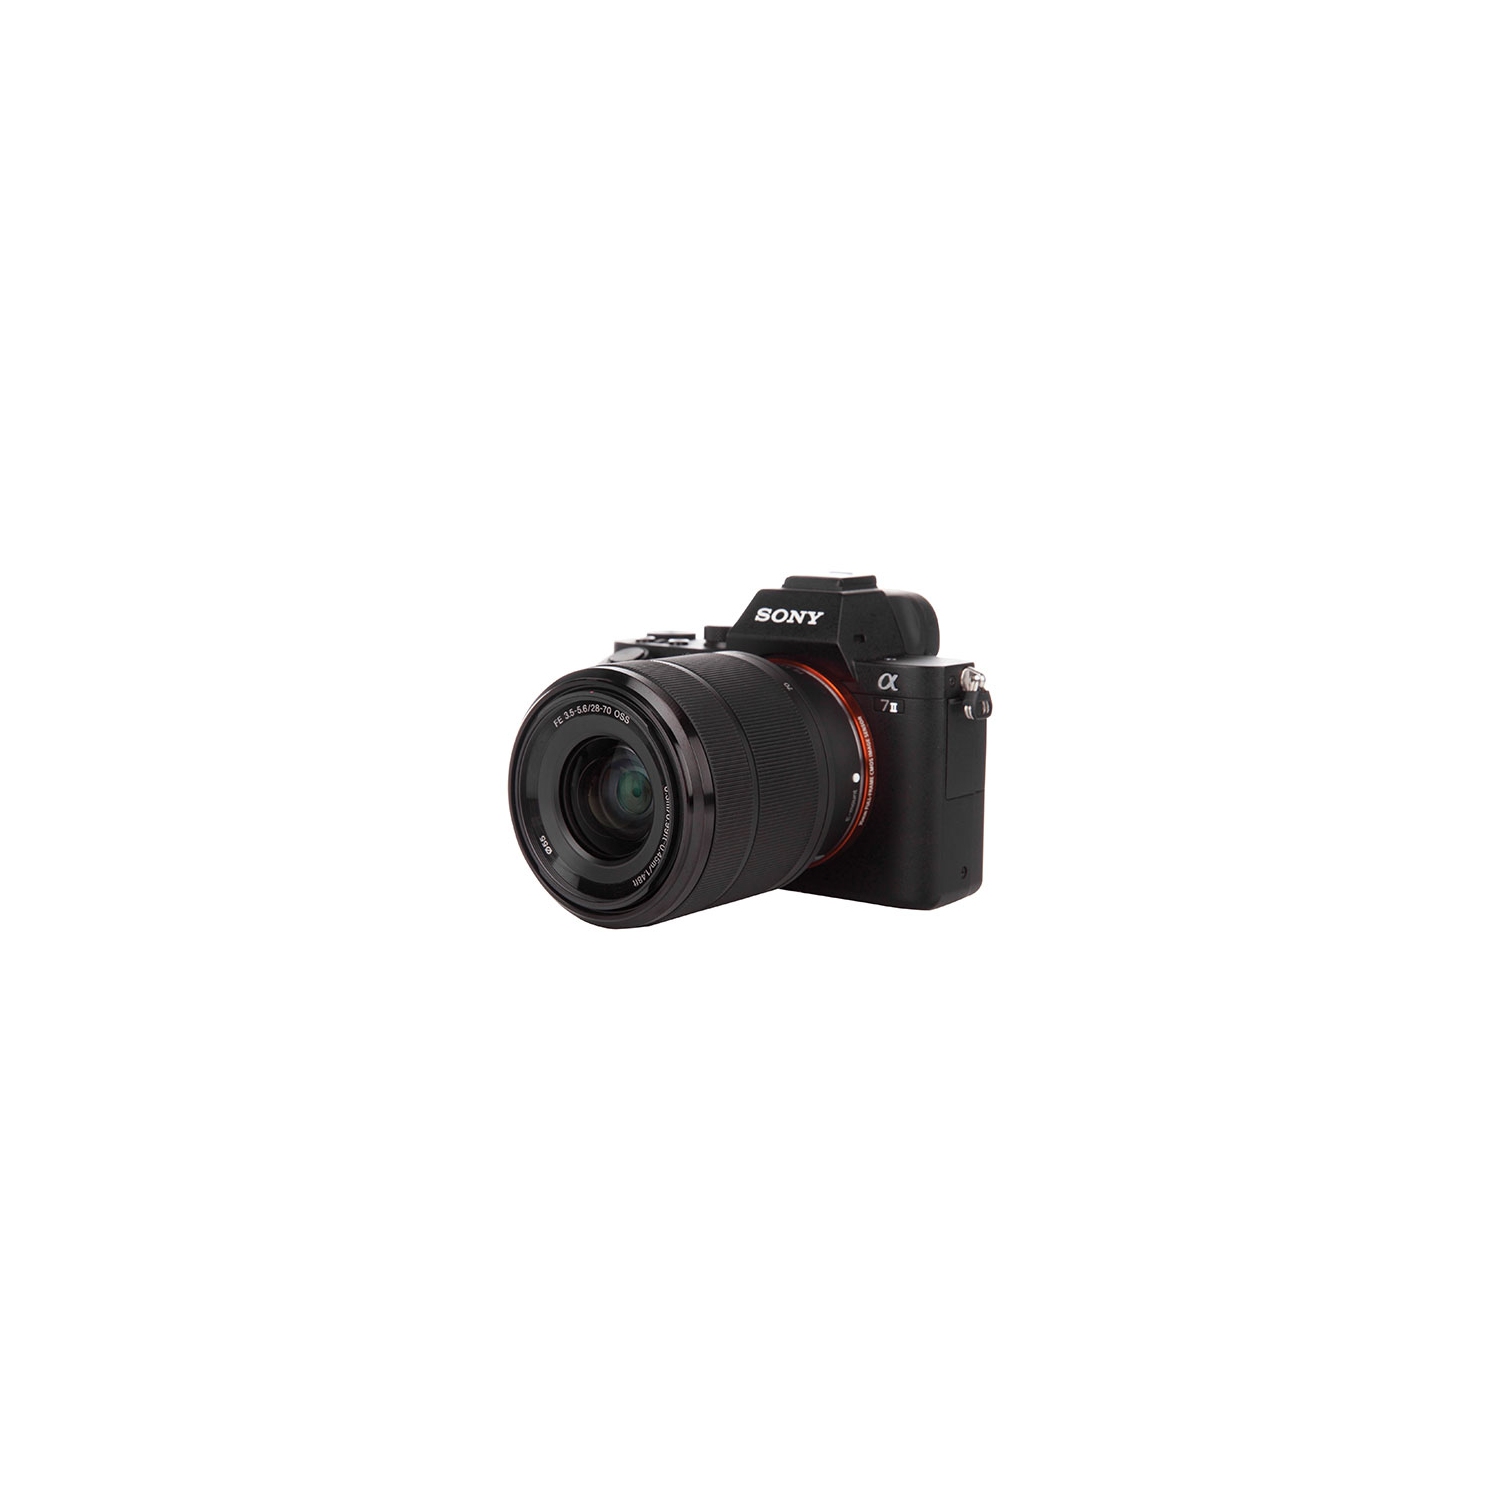 Refurbished (Fair) - Sony Alpha a7 II Full-Frame Mirrorless Camera with FE 28-70mm Lens Kit